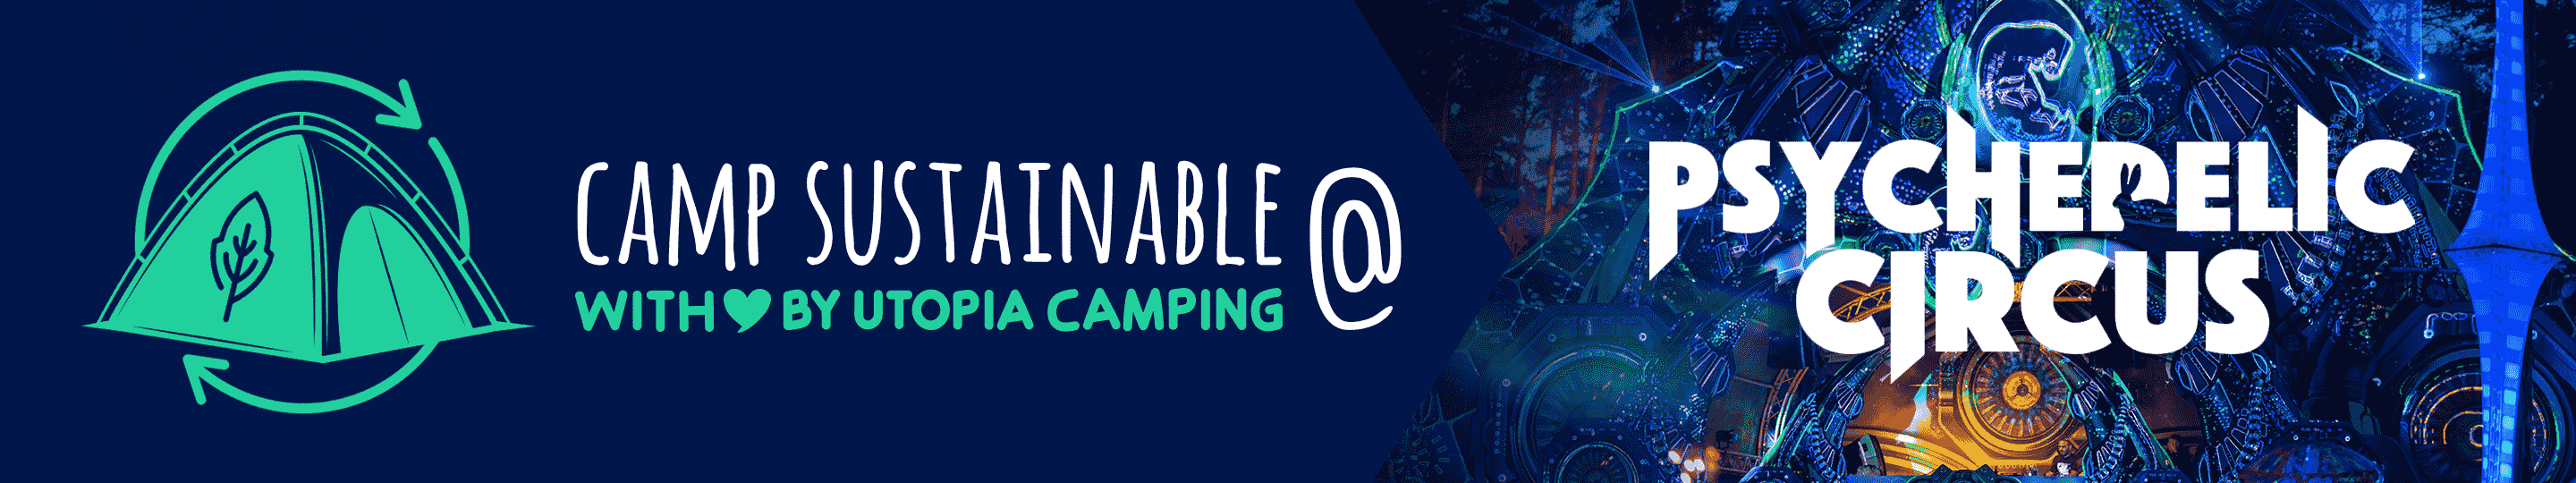 zelt vermieten rent a tent utopia camping festivals